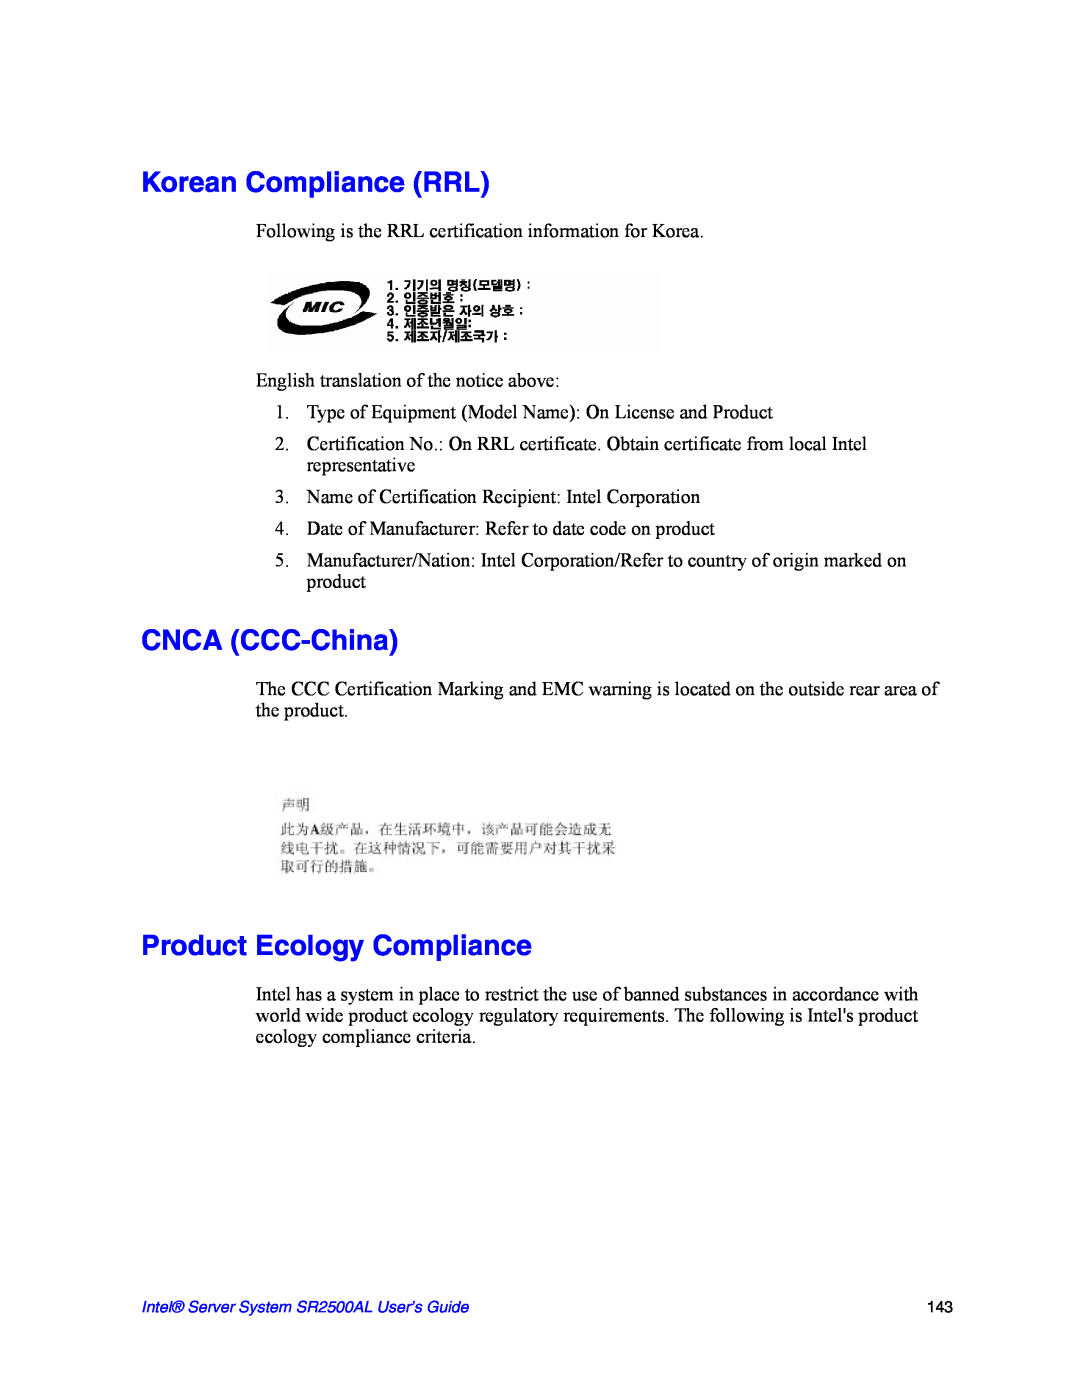 Intel SR2500AL manual Korean Compliance RRL, CNCA CCC-China, Product Ecology Compliance 